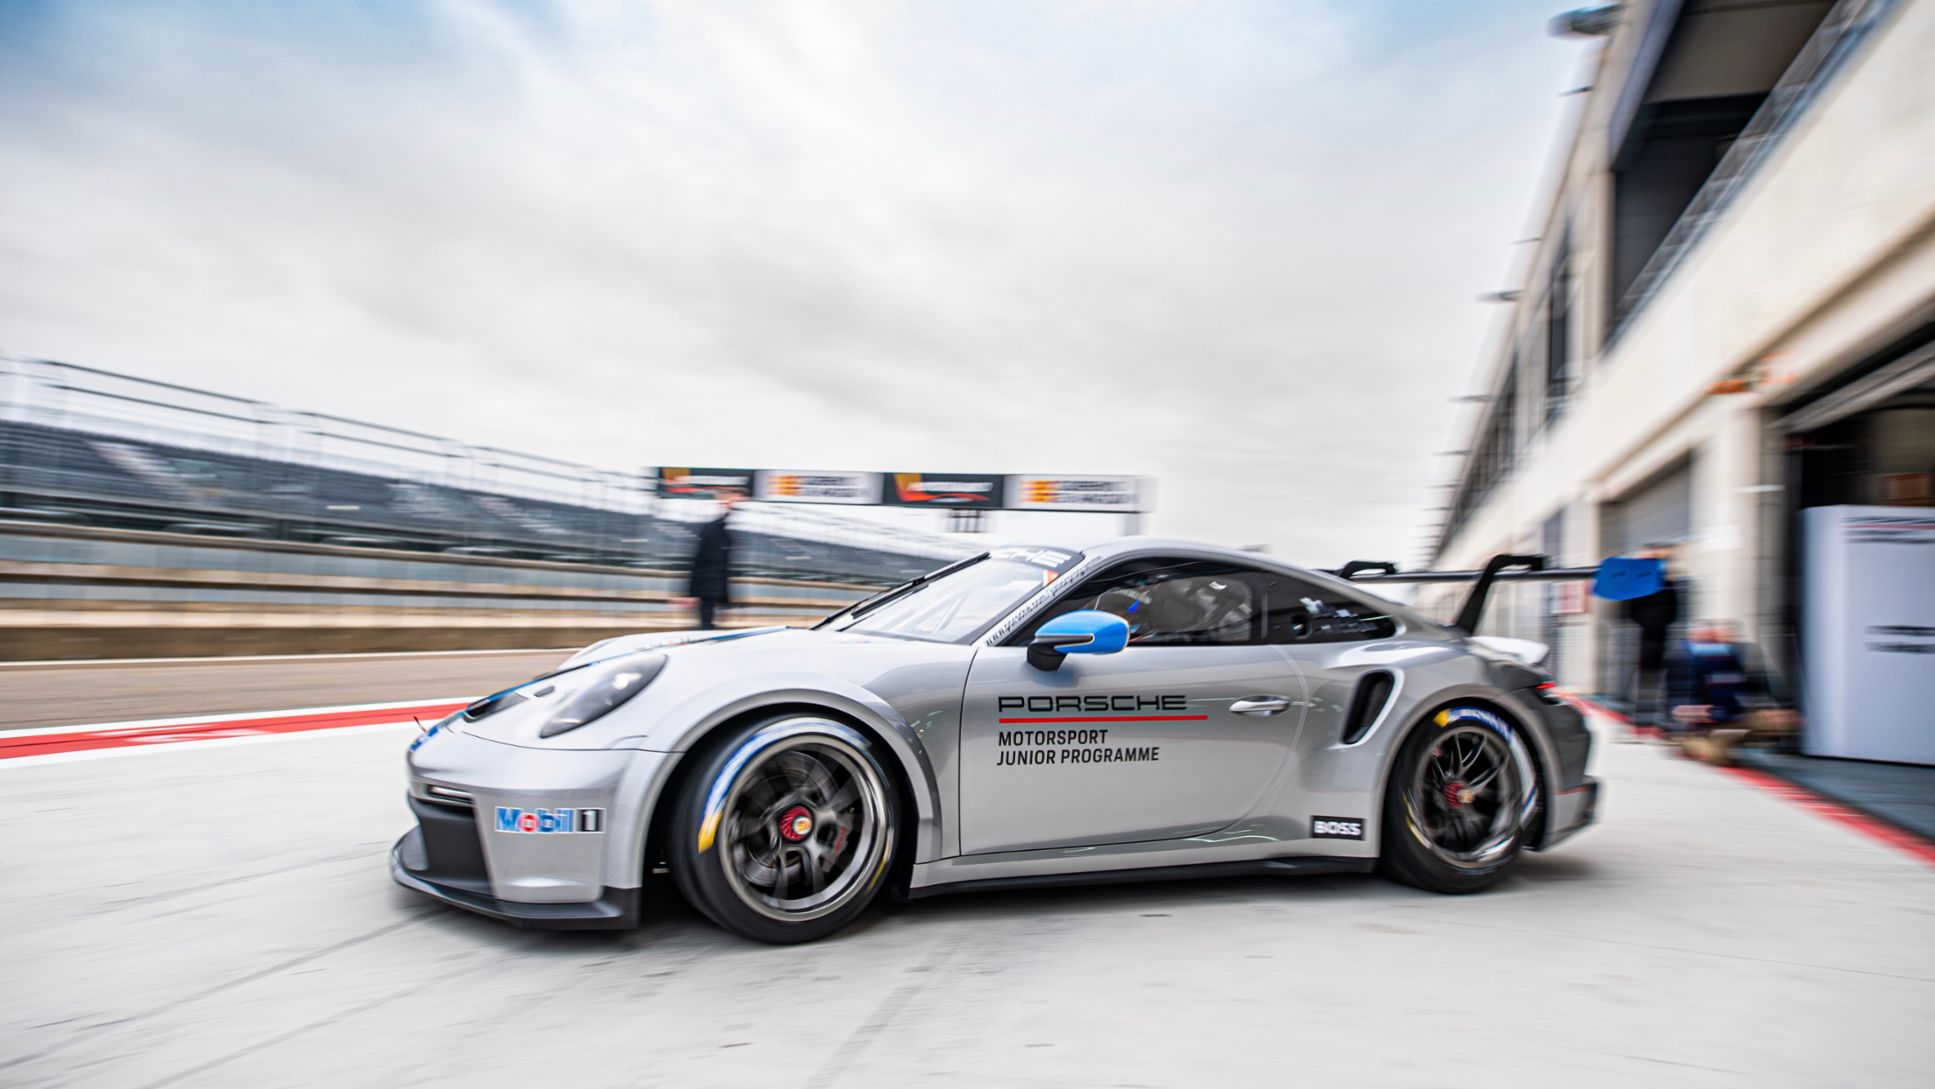 Porsche Motorsport Junior Programm, 911 GT3 Cup, 2022, Porsche AG